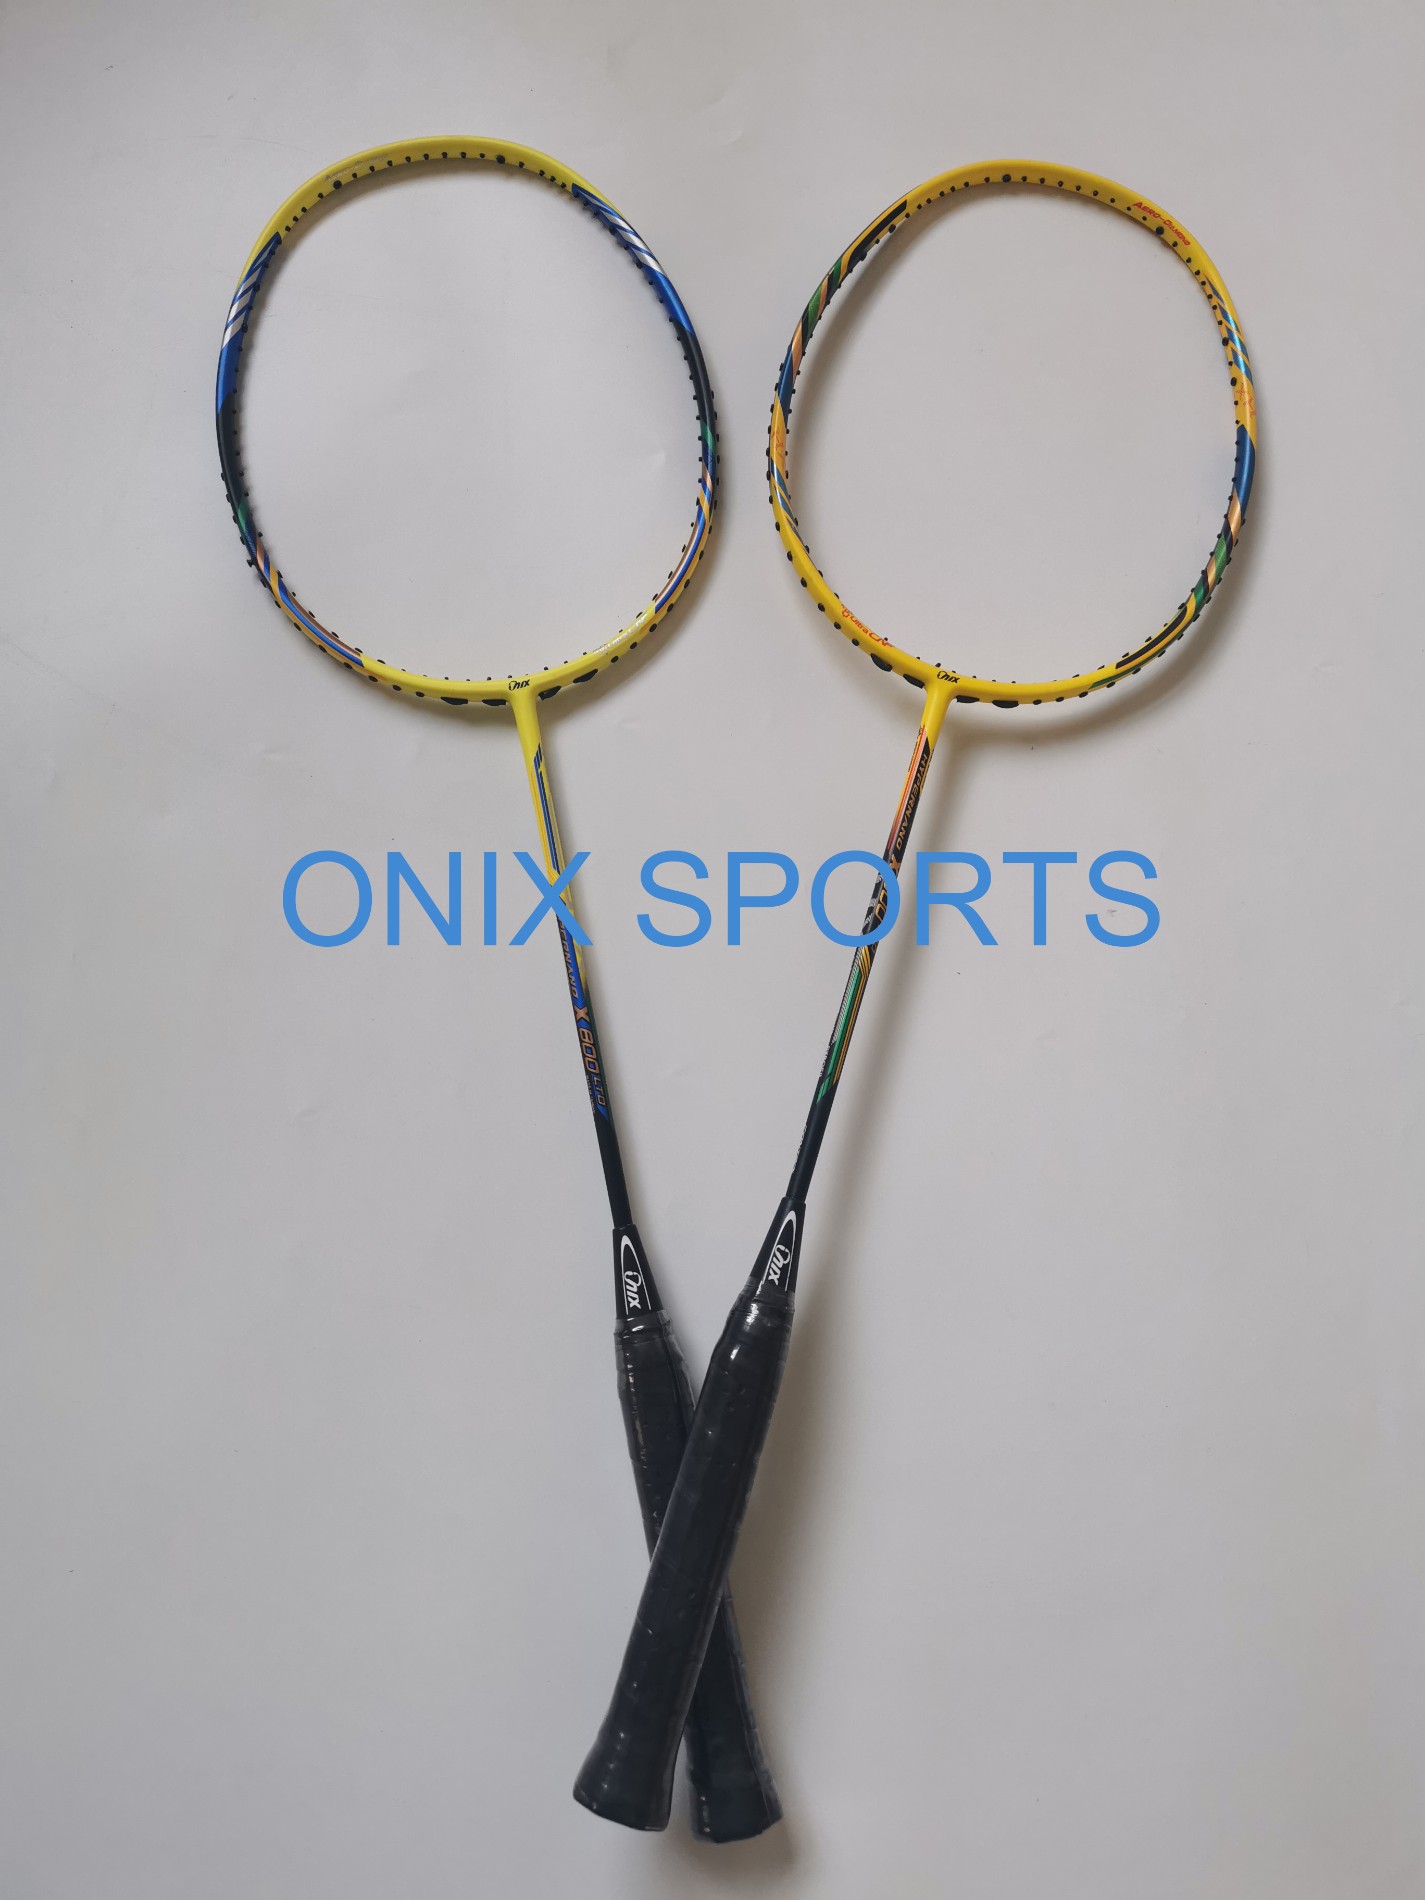 Hot sales for Carbon Badminton Racket Manufacturers, Hot sales for Carbon Badminton Racket Factory, Supply Hot sales for Carbon Badminton Racket